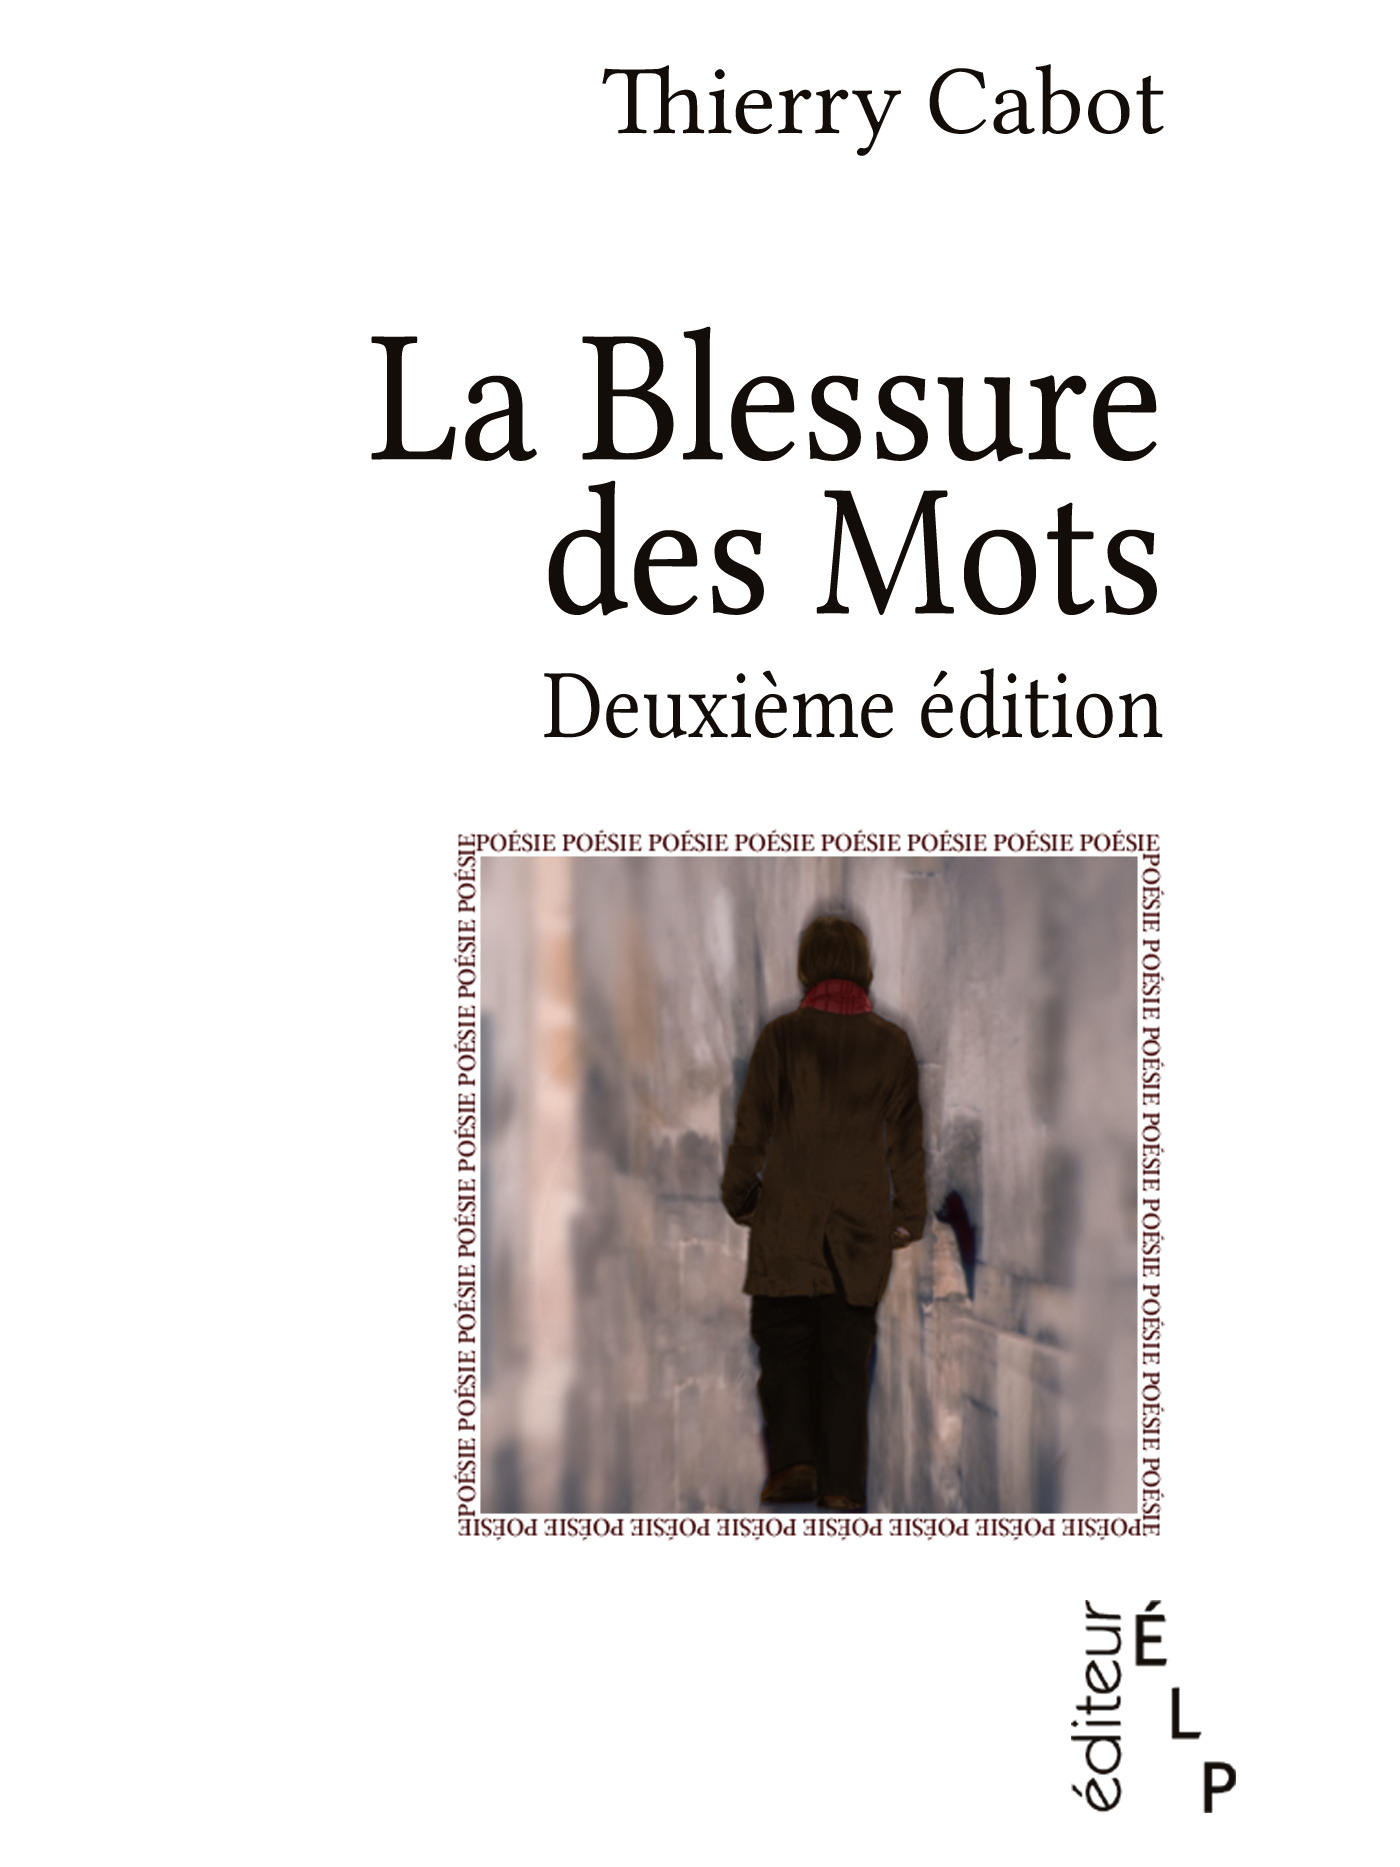 La Blessure [1998]